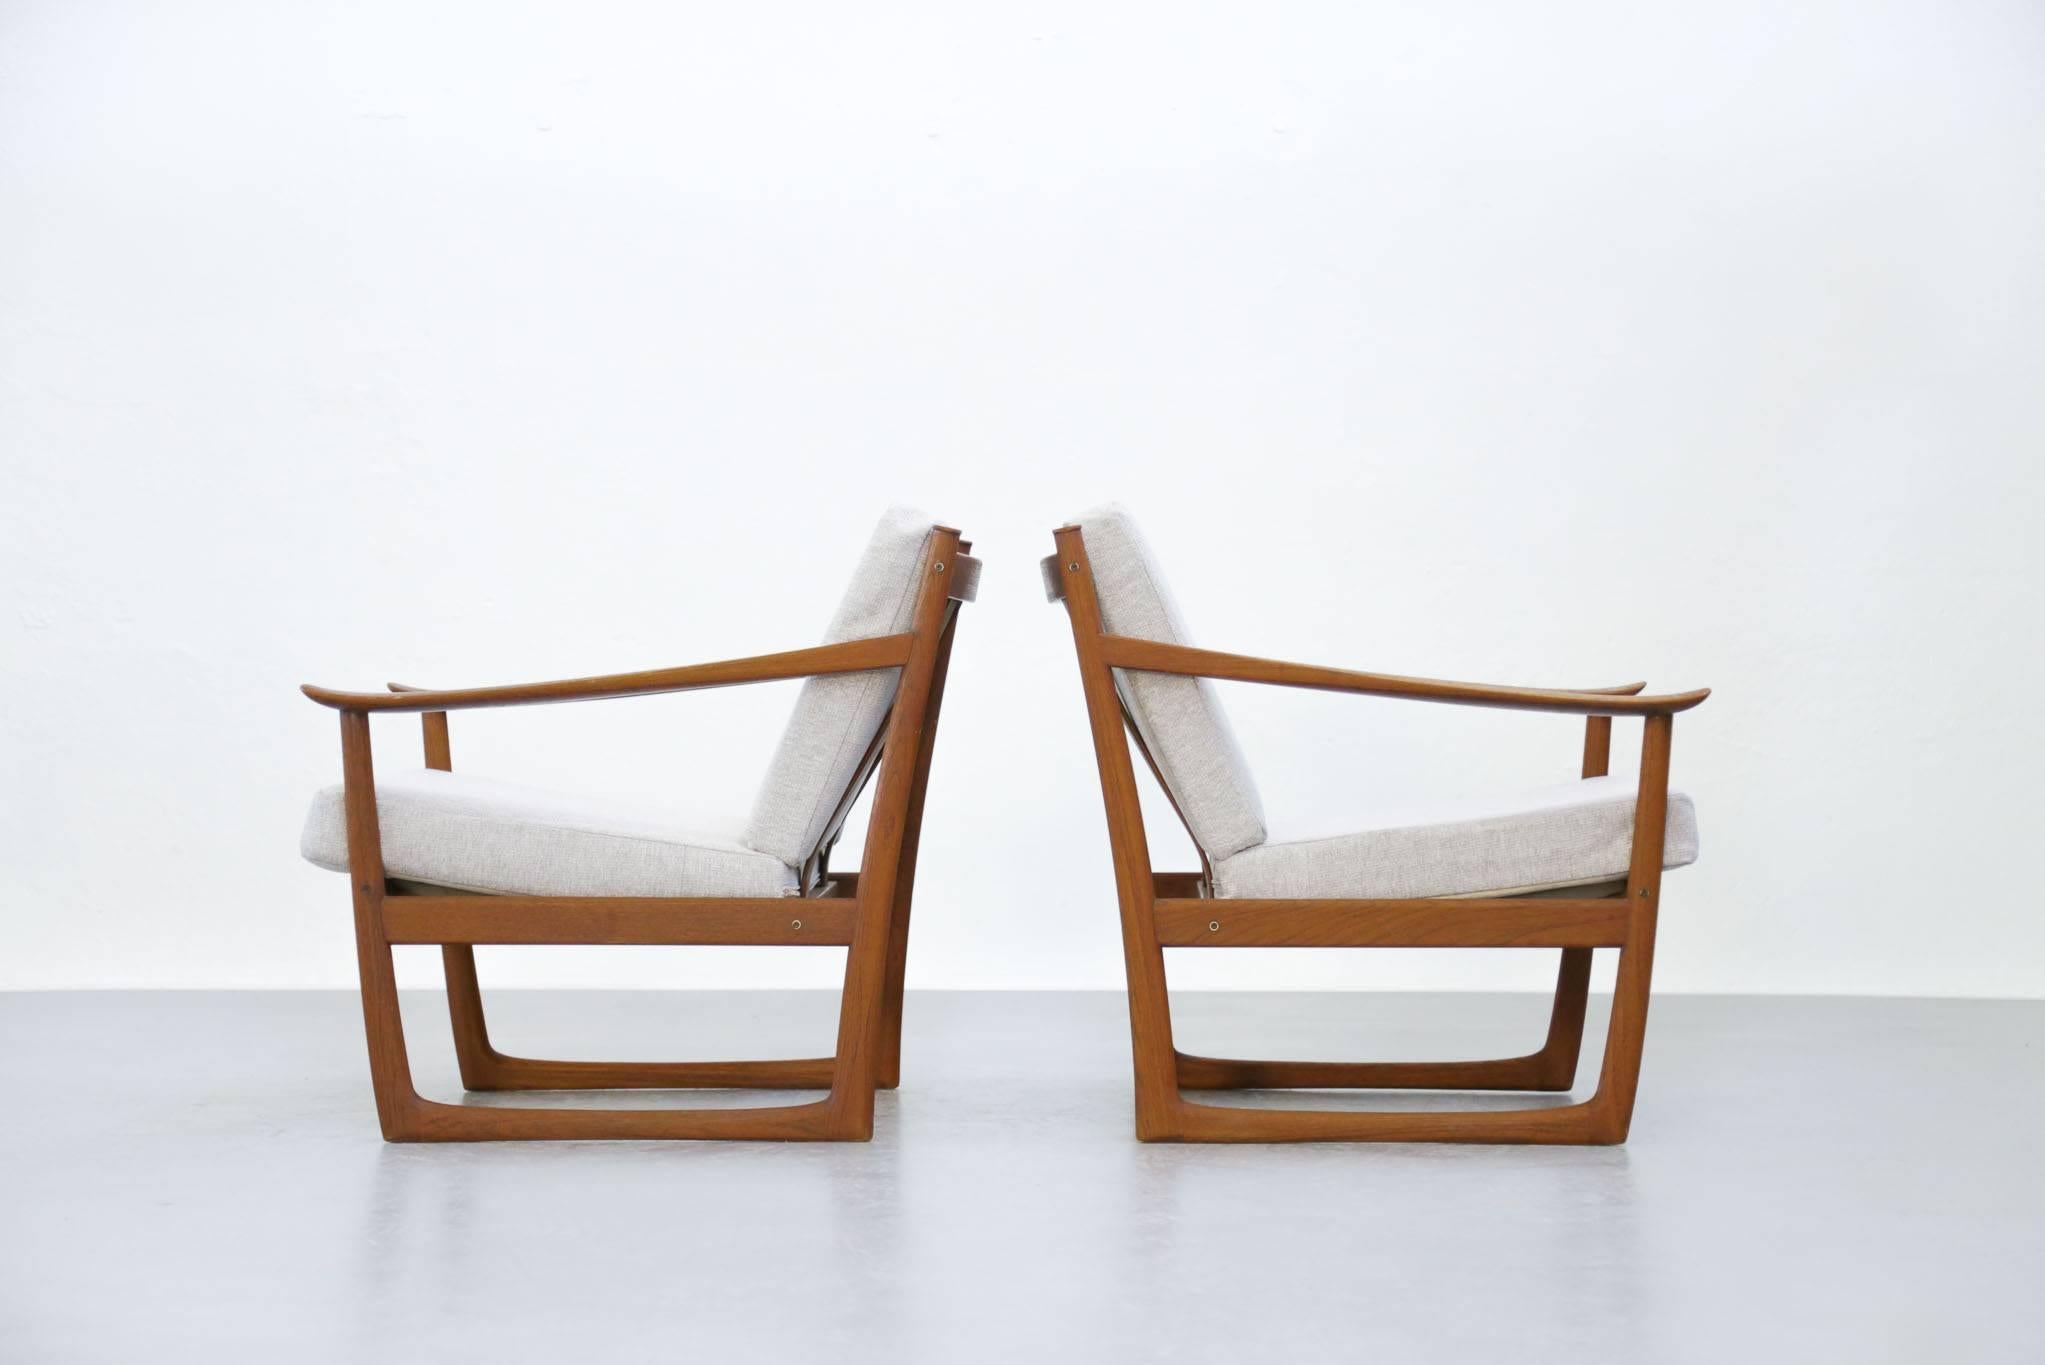 20th Century Pair of Danish Modern Lounge Chair Peter Hvidt & Orla Mølgaard FD130